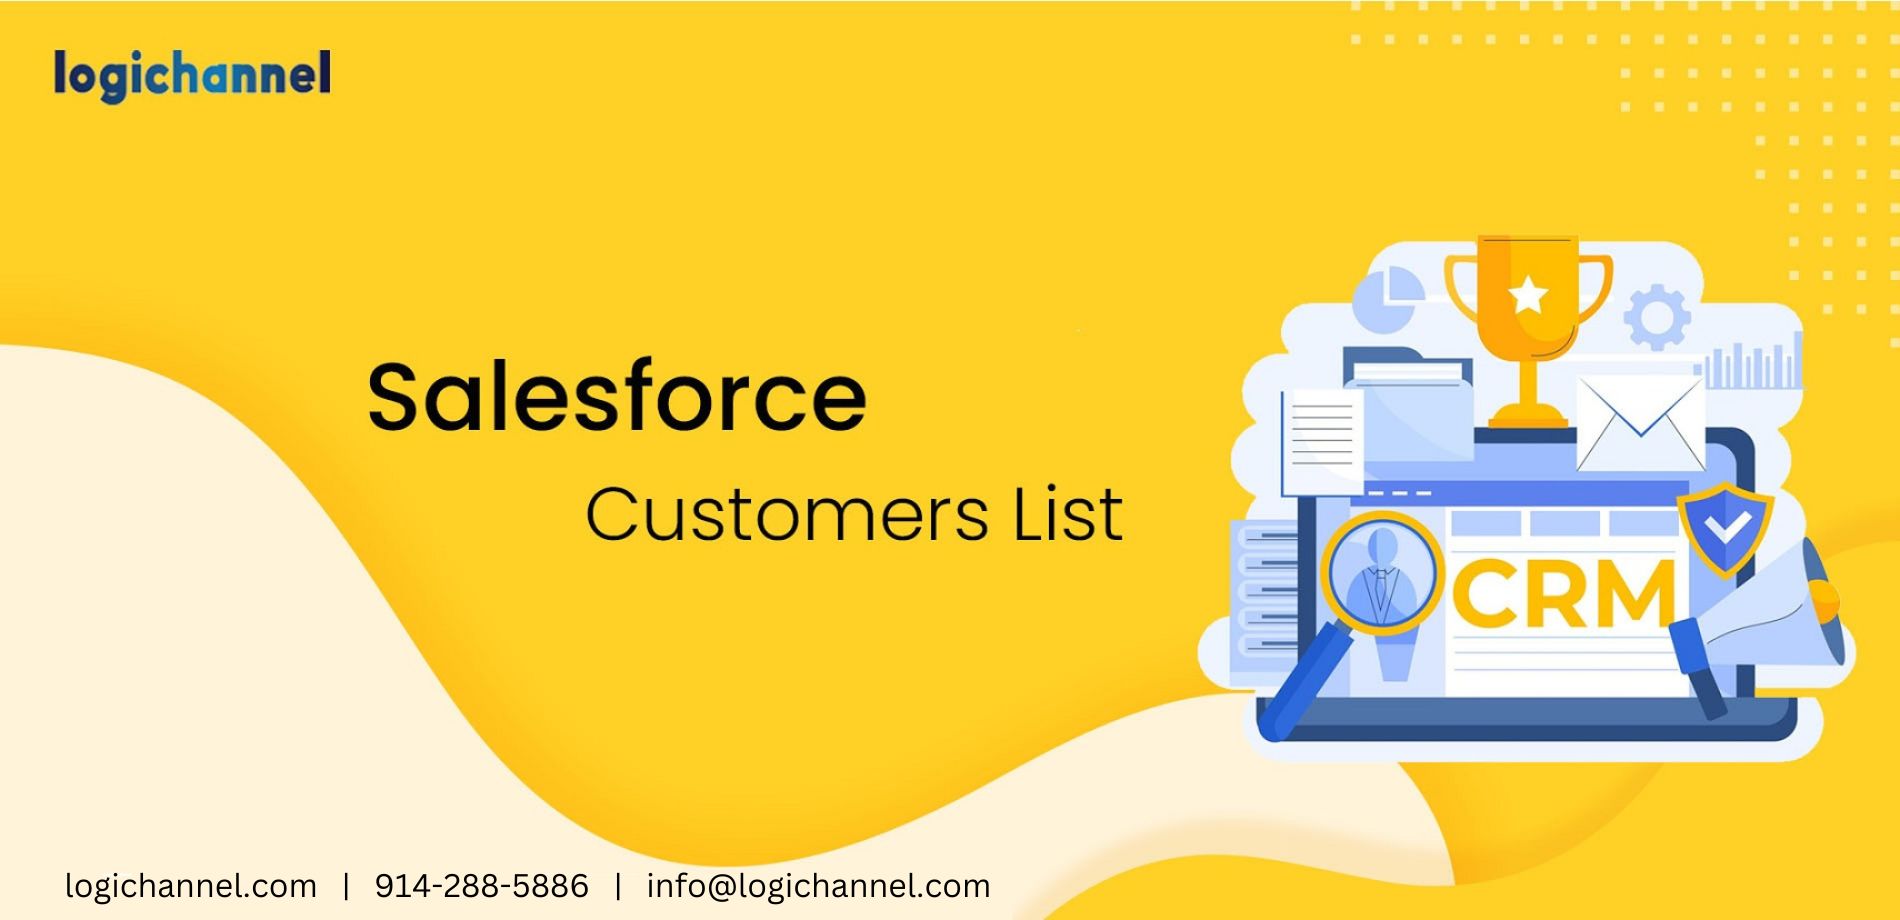 Salesforce Customers List | Companies Using Salesforce